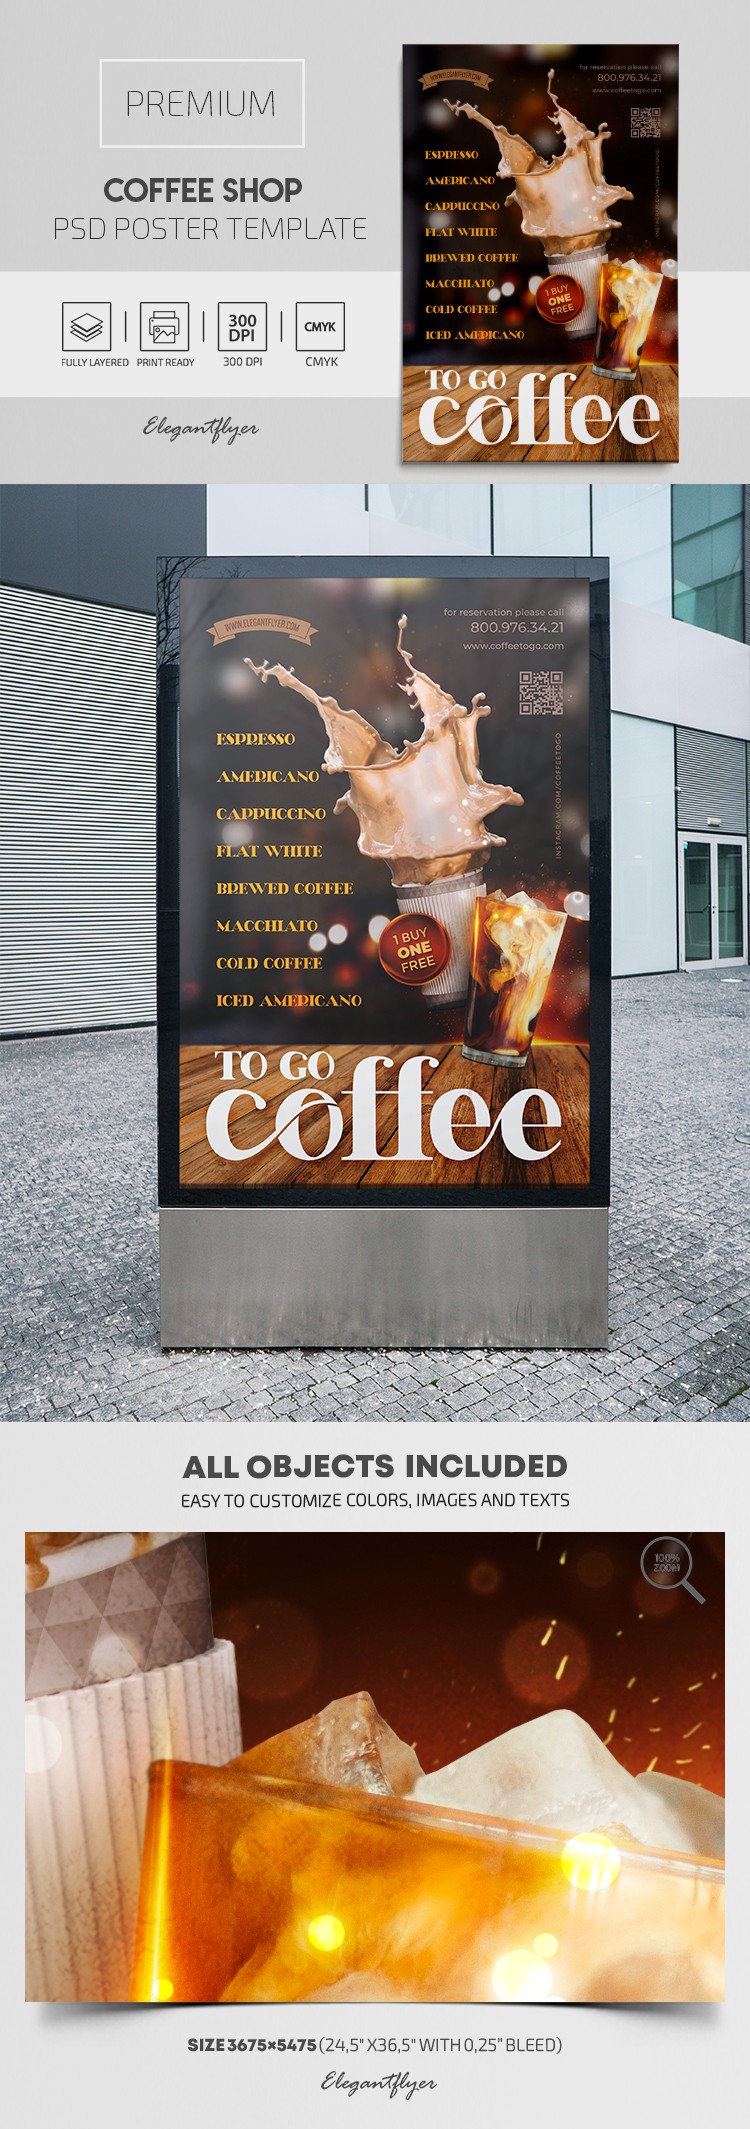 Kaffeehaus-Poster by ElegantFlyer